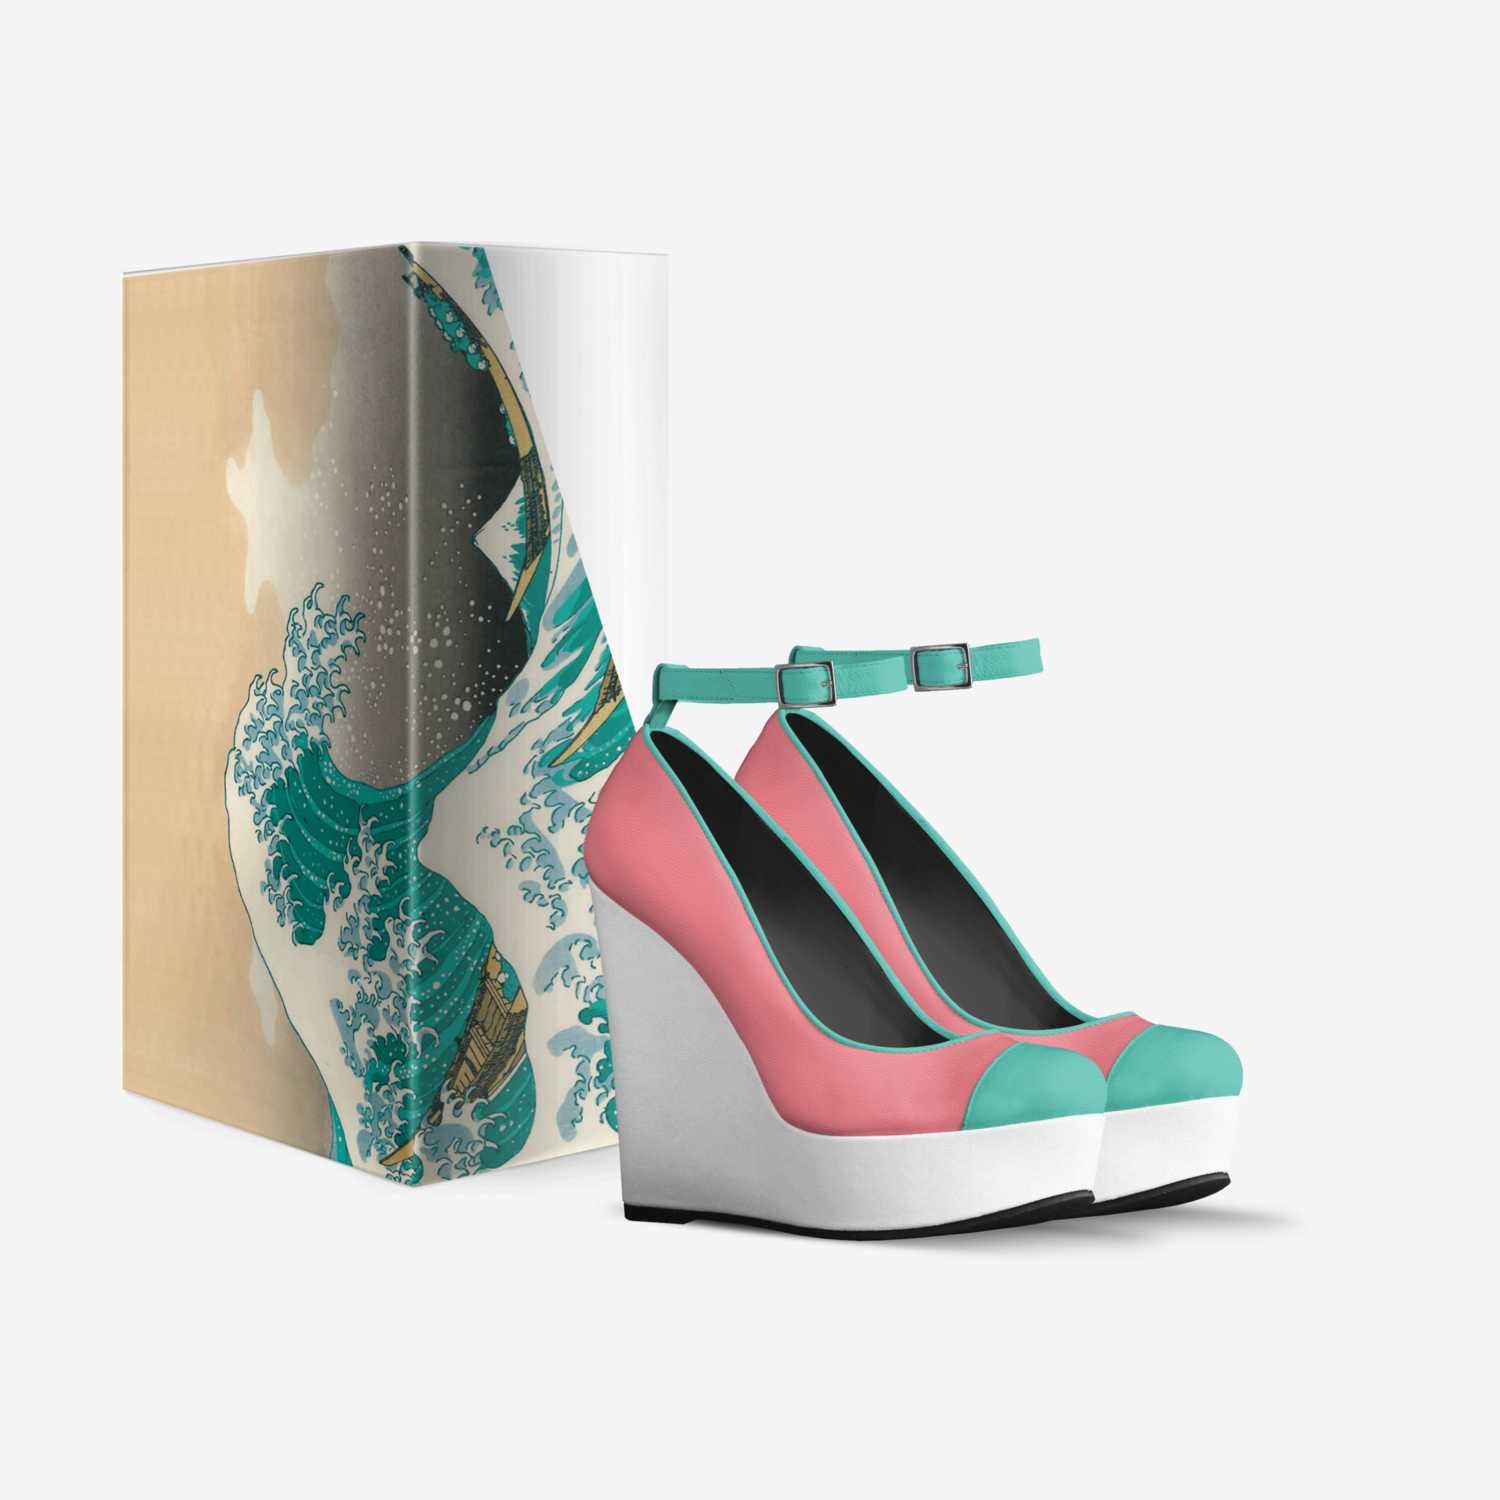 Felix custom made in Italy shoes by Denisa Cristiana | Box view